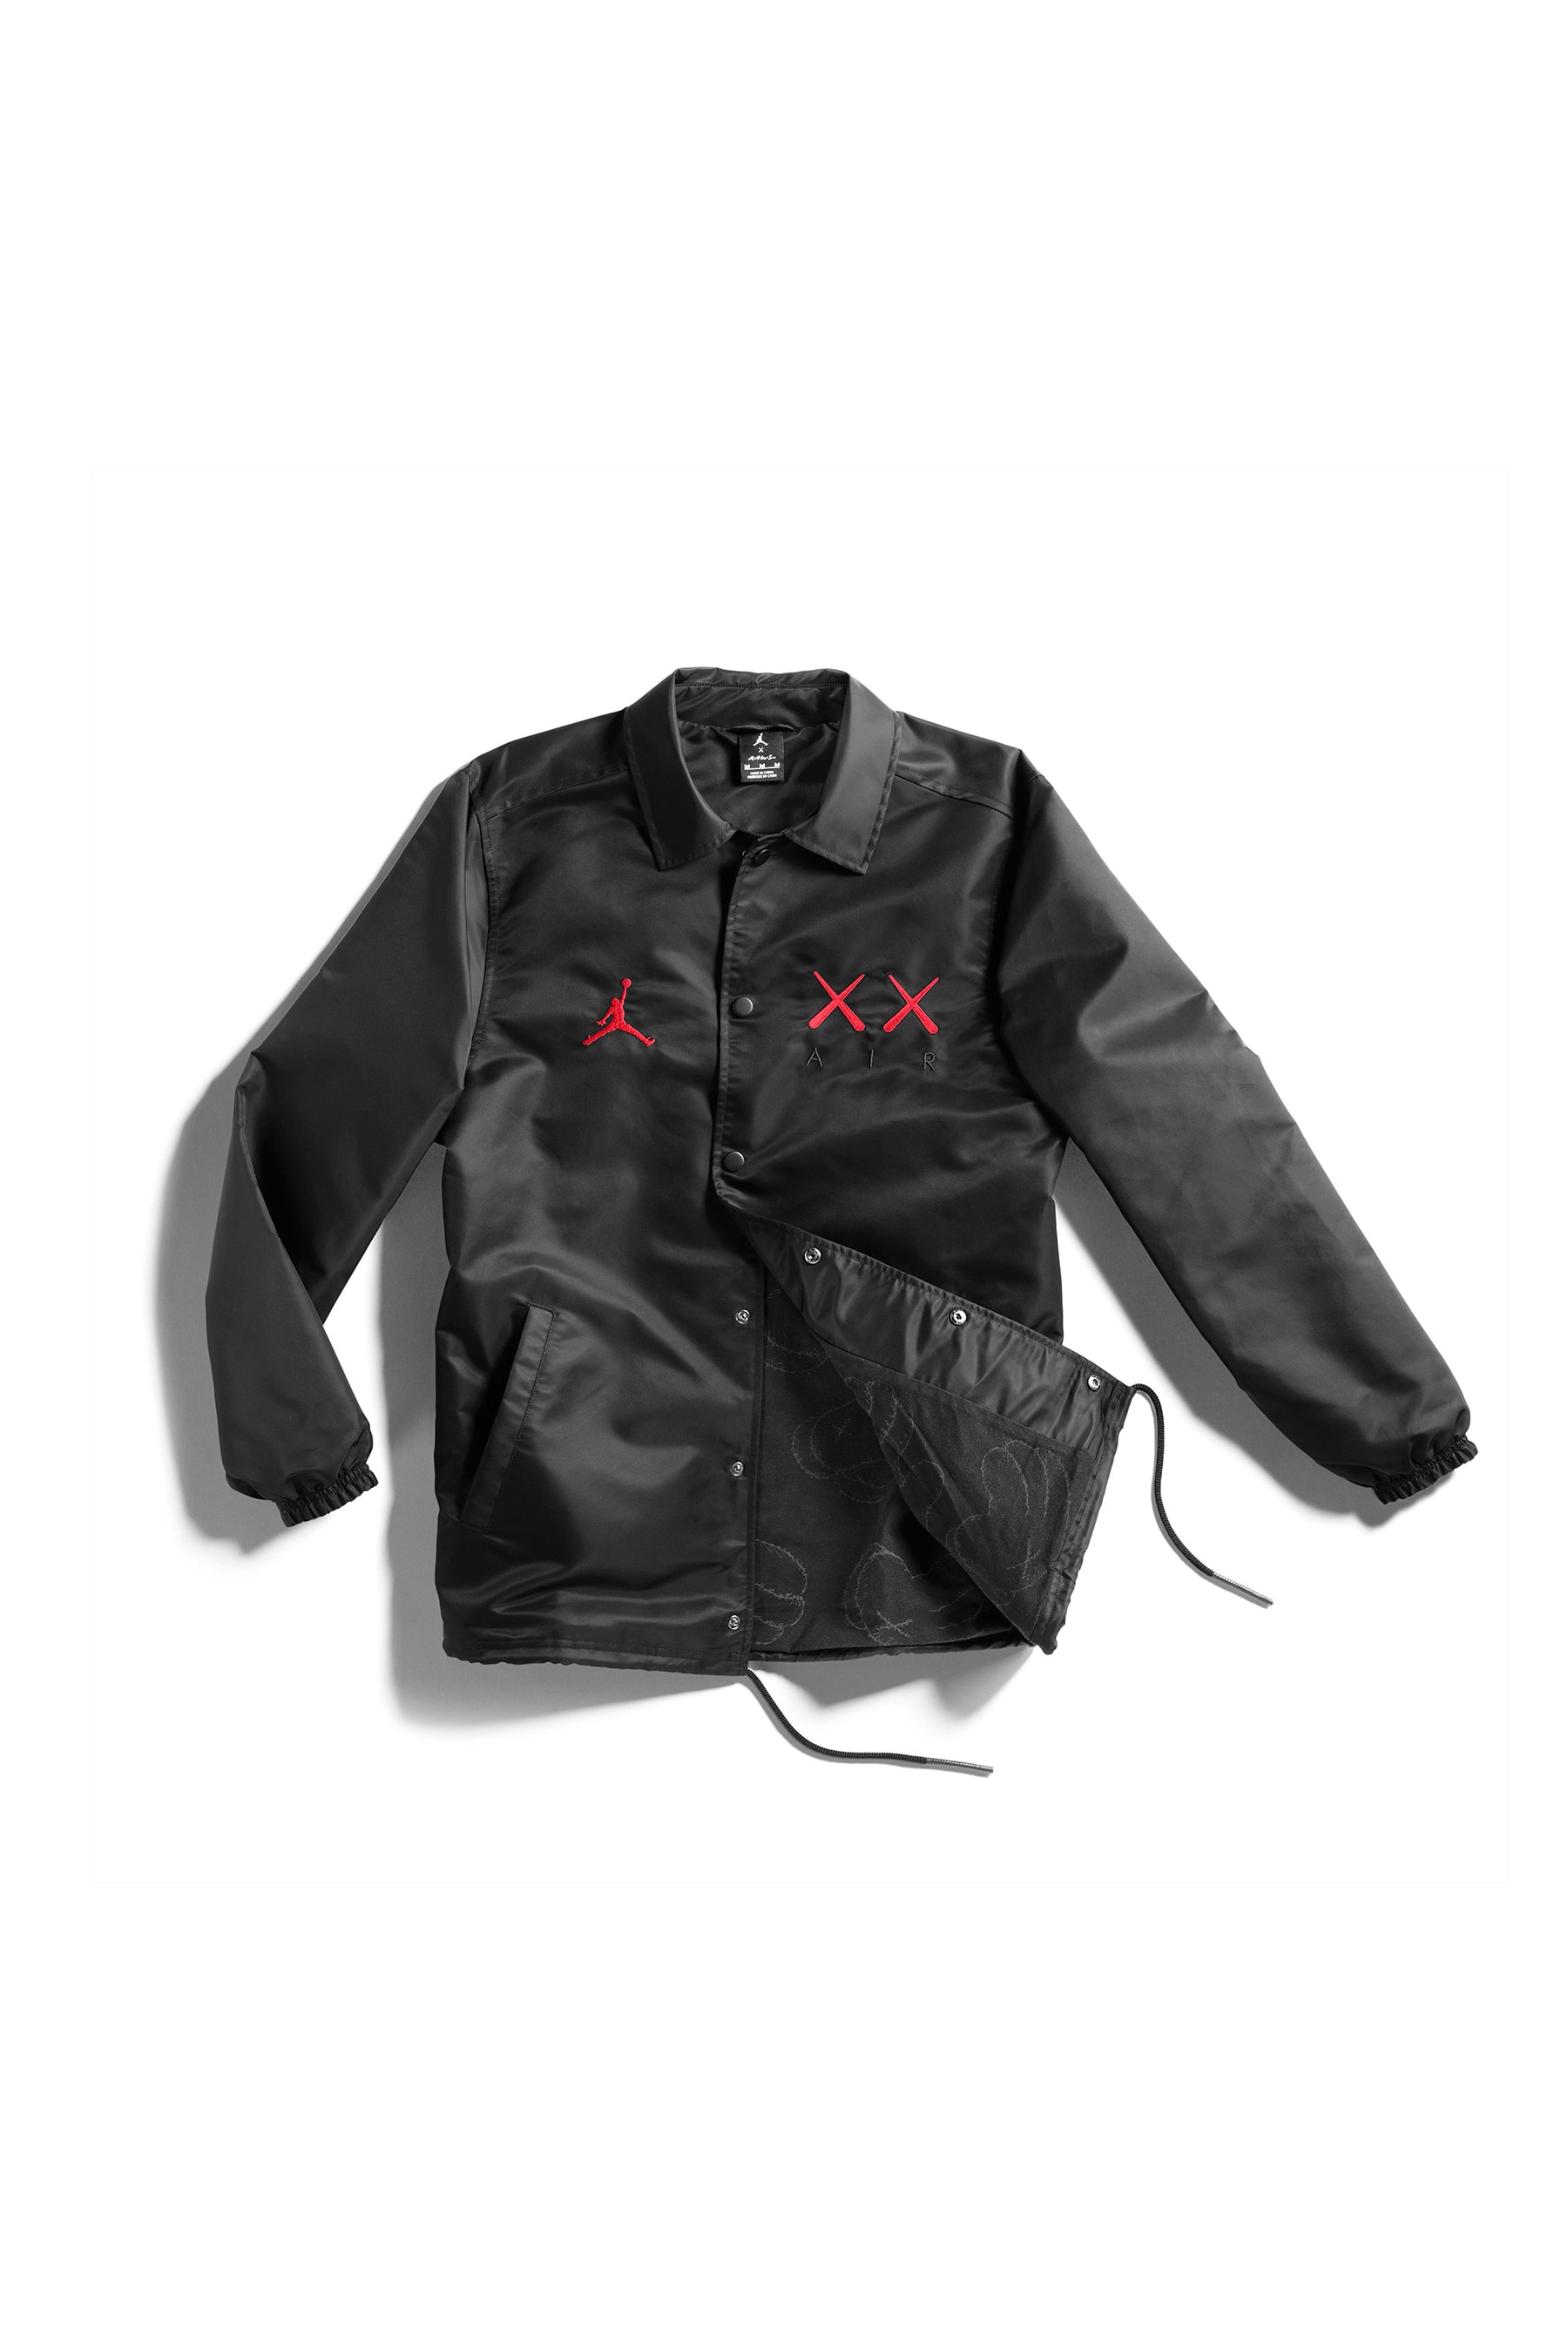 KAWS x Jordan Capsule Coaches Jacket